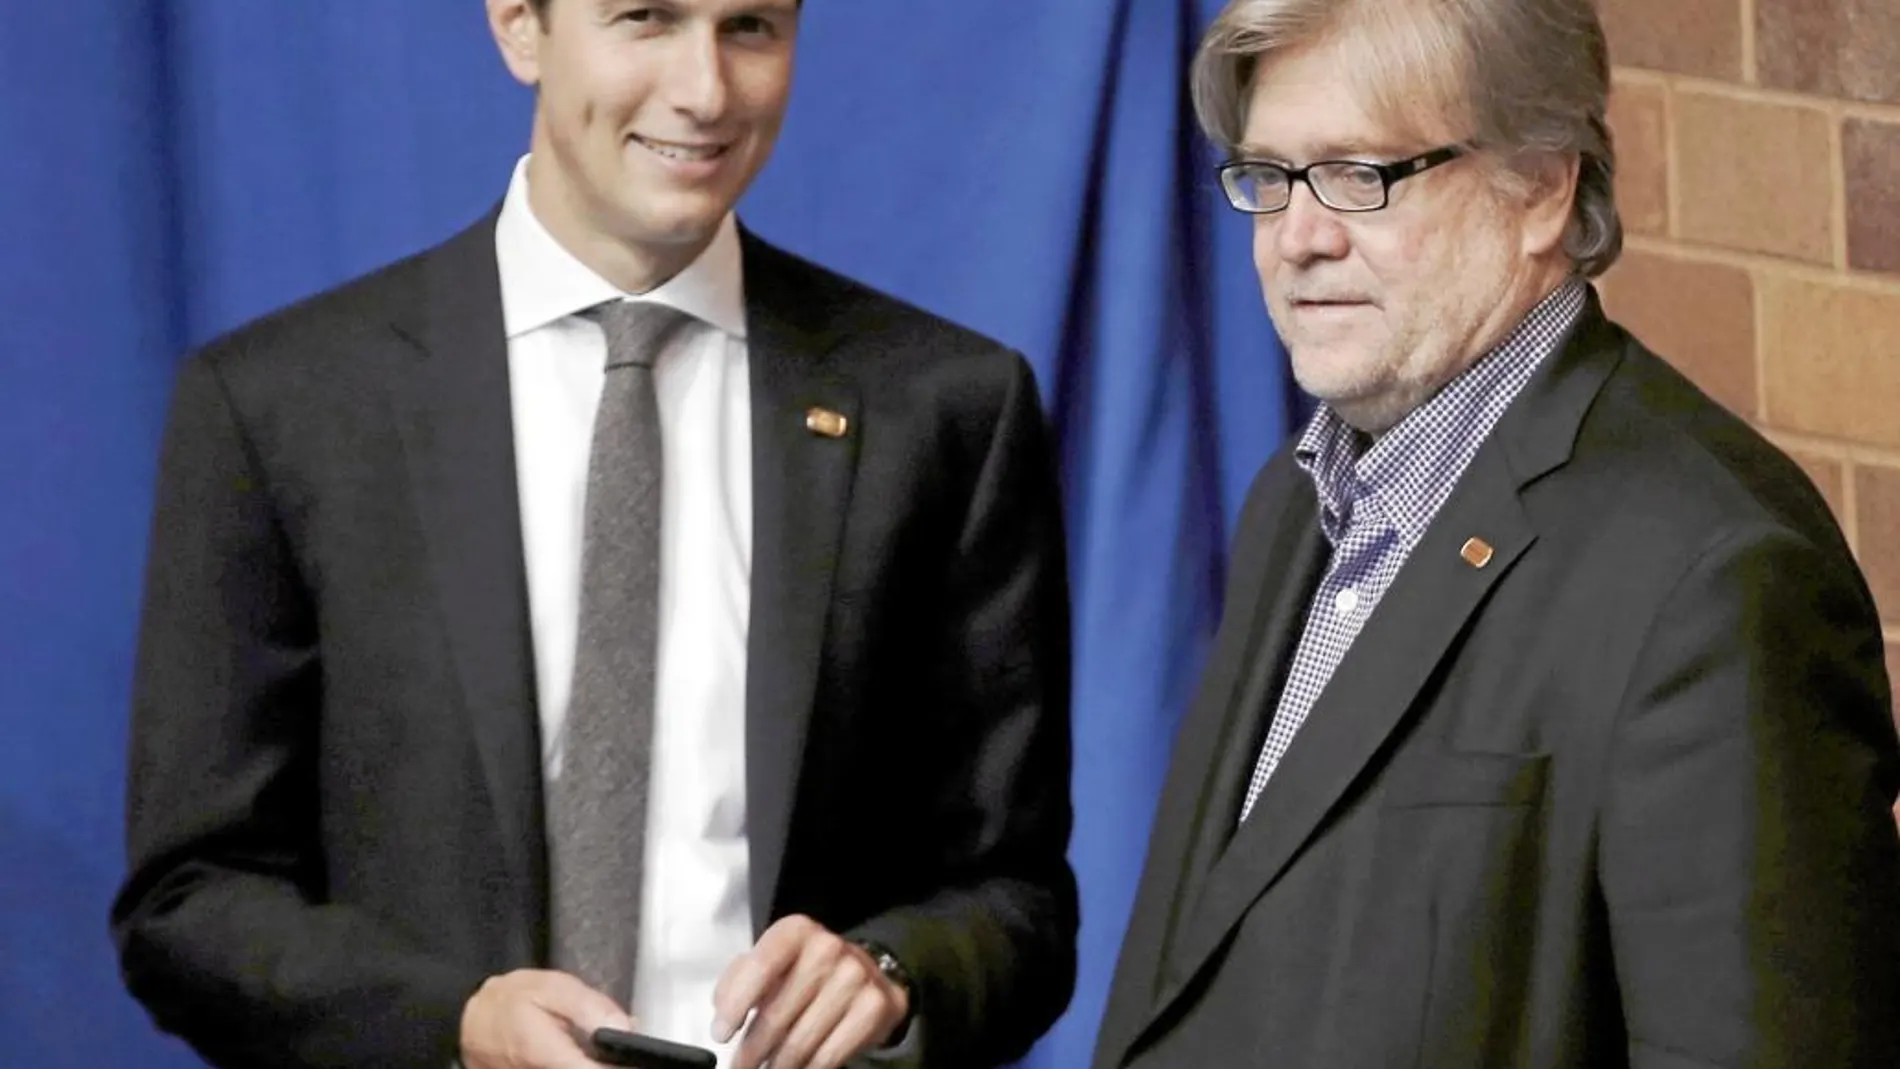 El yerno de Trump, Jared Kushner (izq.), junto a Stephen Bannon, asesor principal